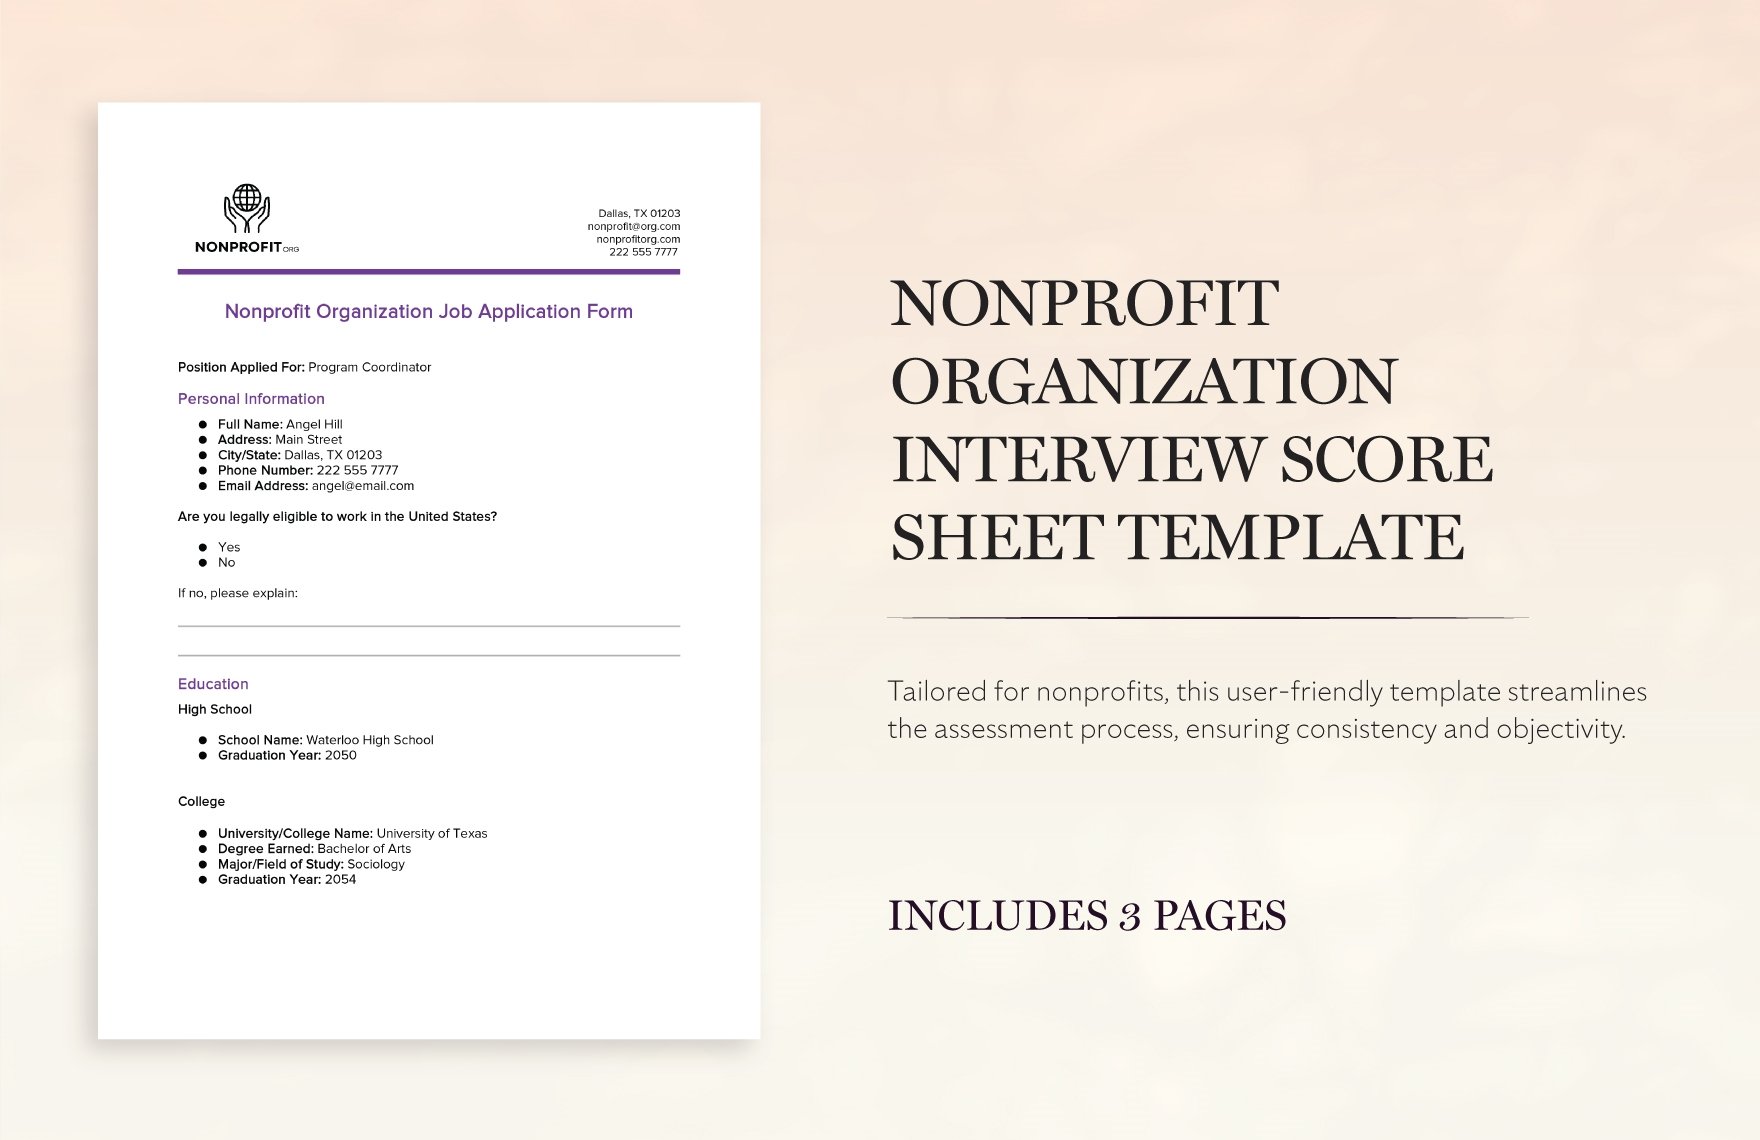 Nonprofit Organization Interview Score Sheet Template in Word, Google Docs, PDF